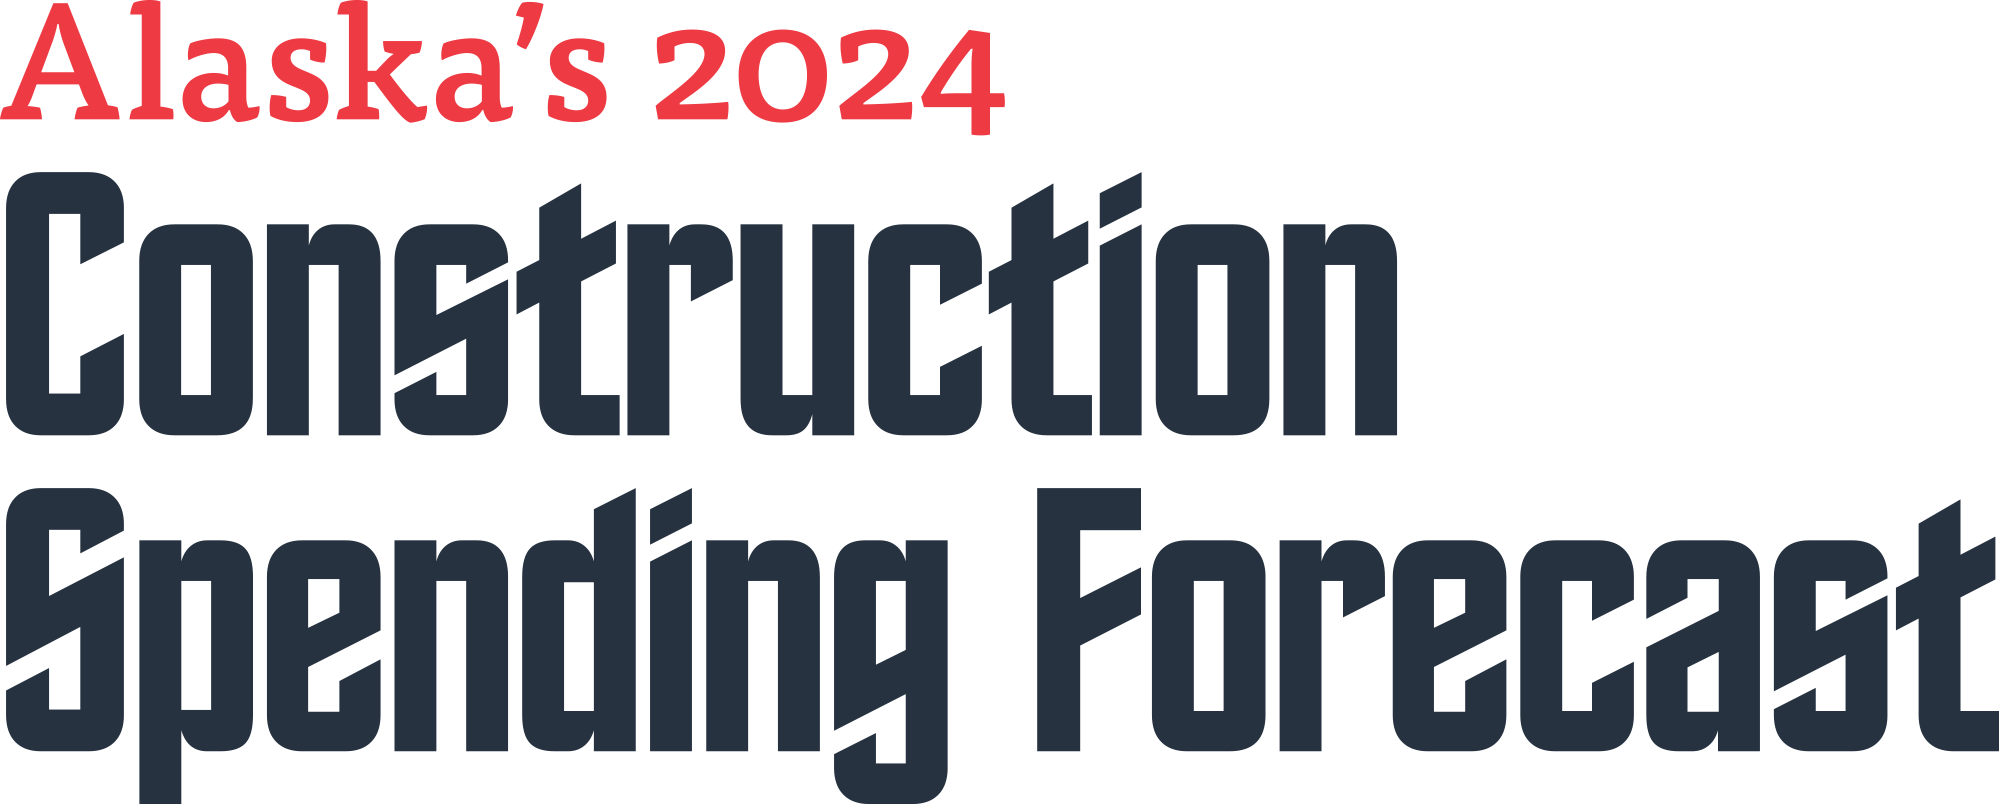 Alaska’s 2024 Construction Spending Forecast